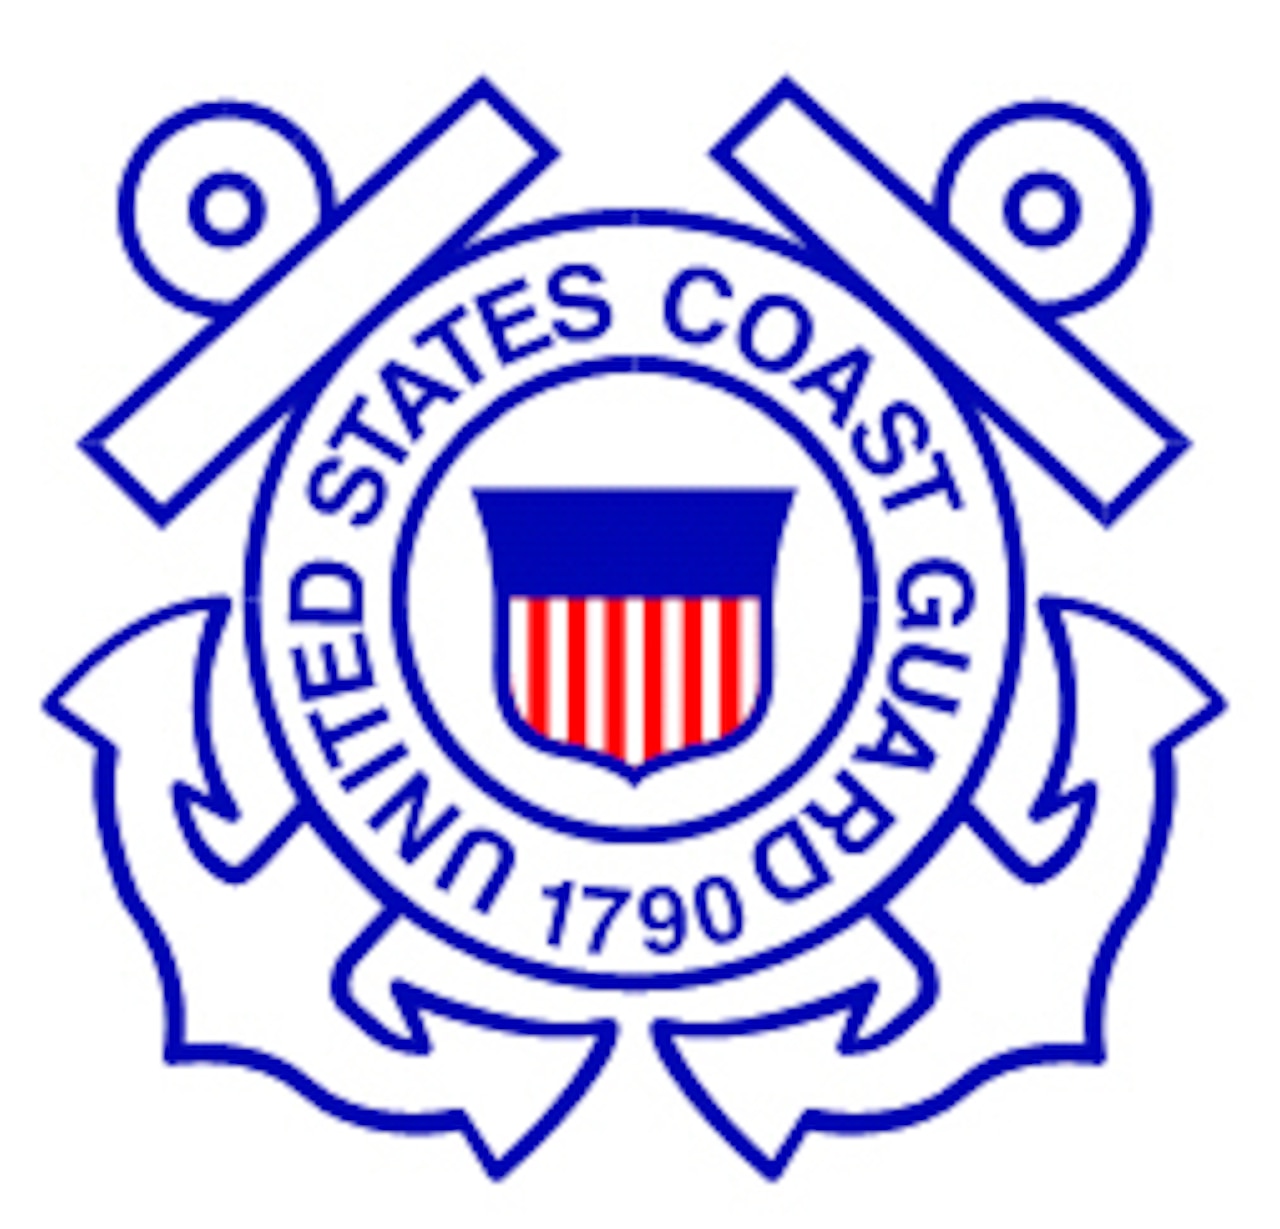 U.S. Coast Guard logo